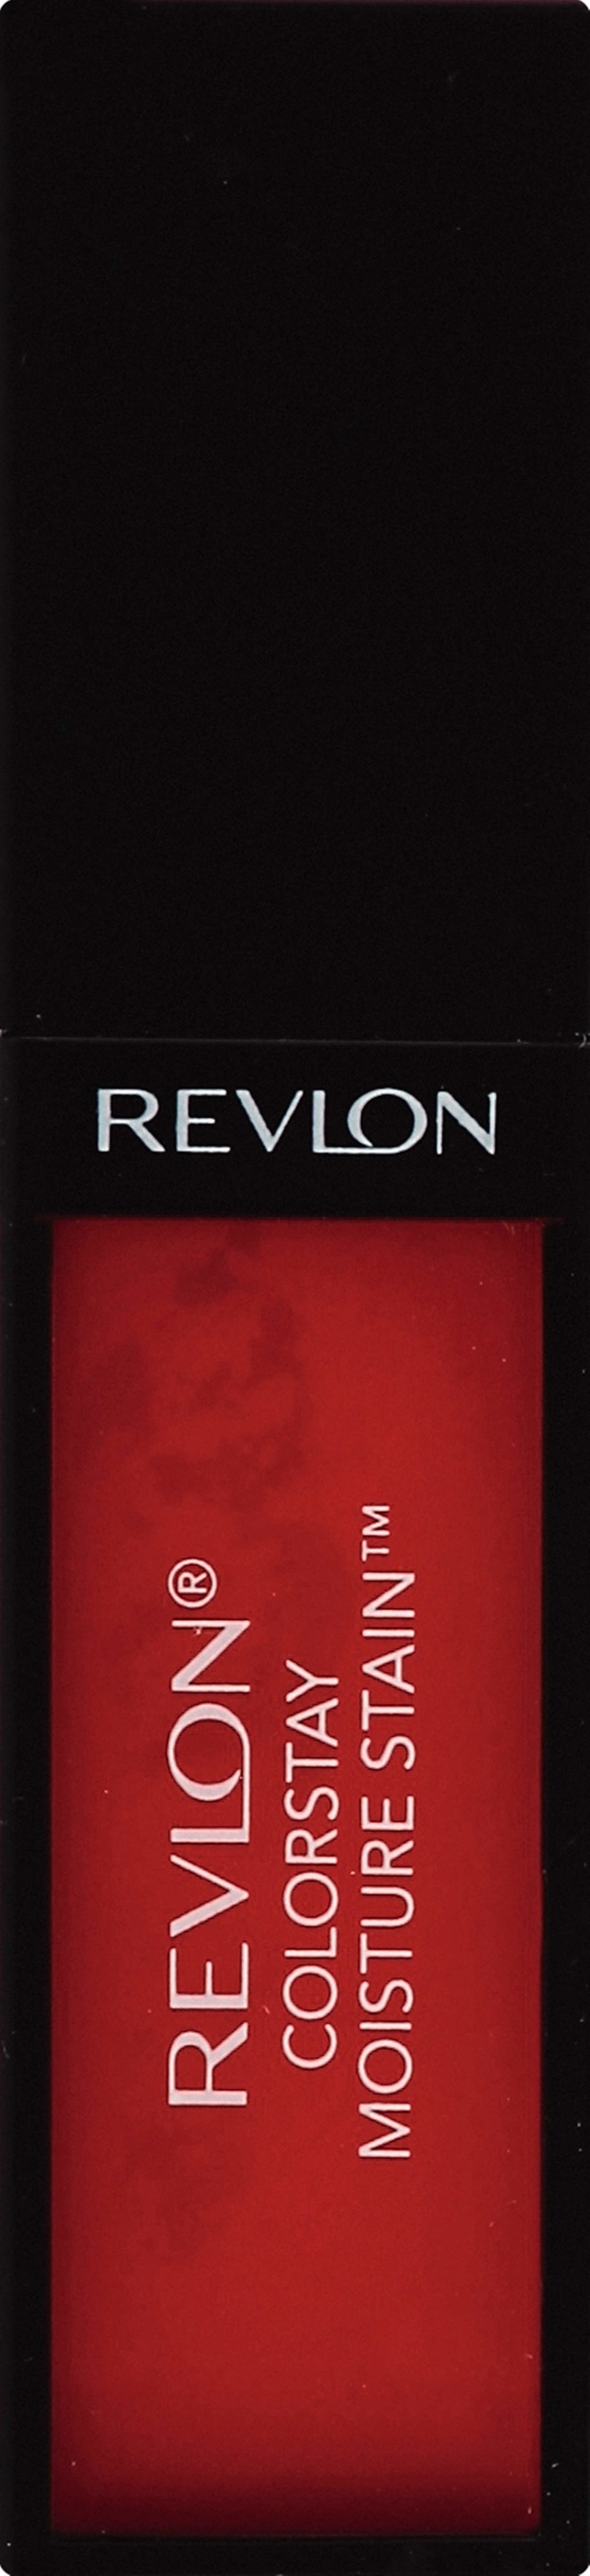 Revlon Colorstay Moisture Stain - Barcelona Nights (015) - 0.27 oz